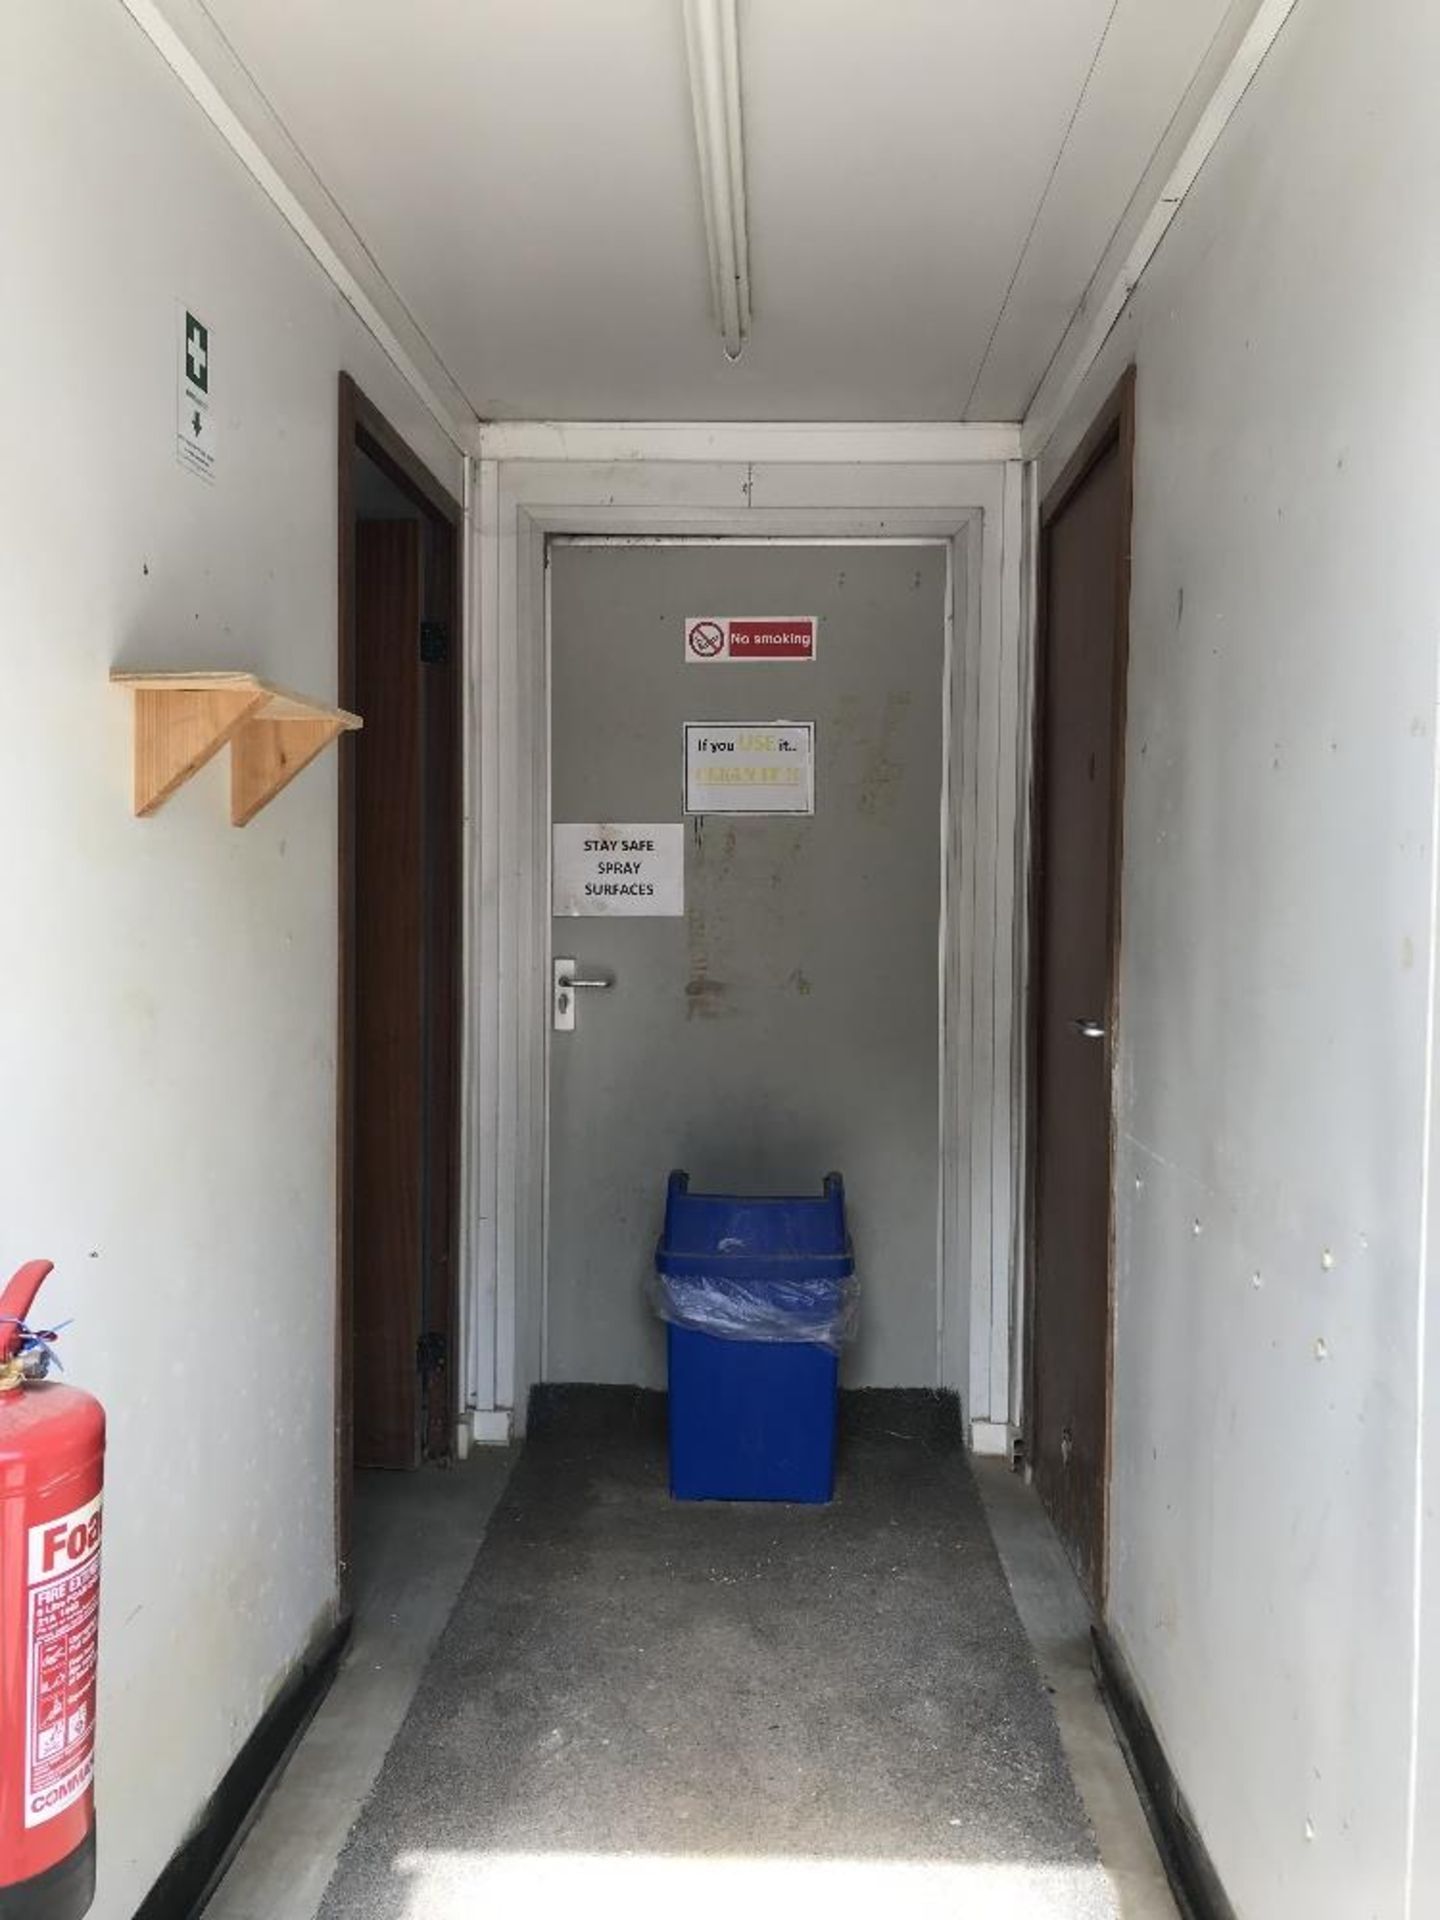 Portacabin jack legged staff toilet unit - Image 4 of 12